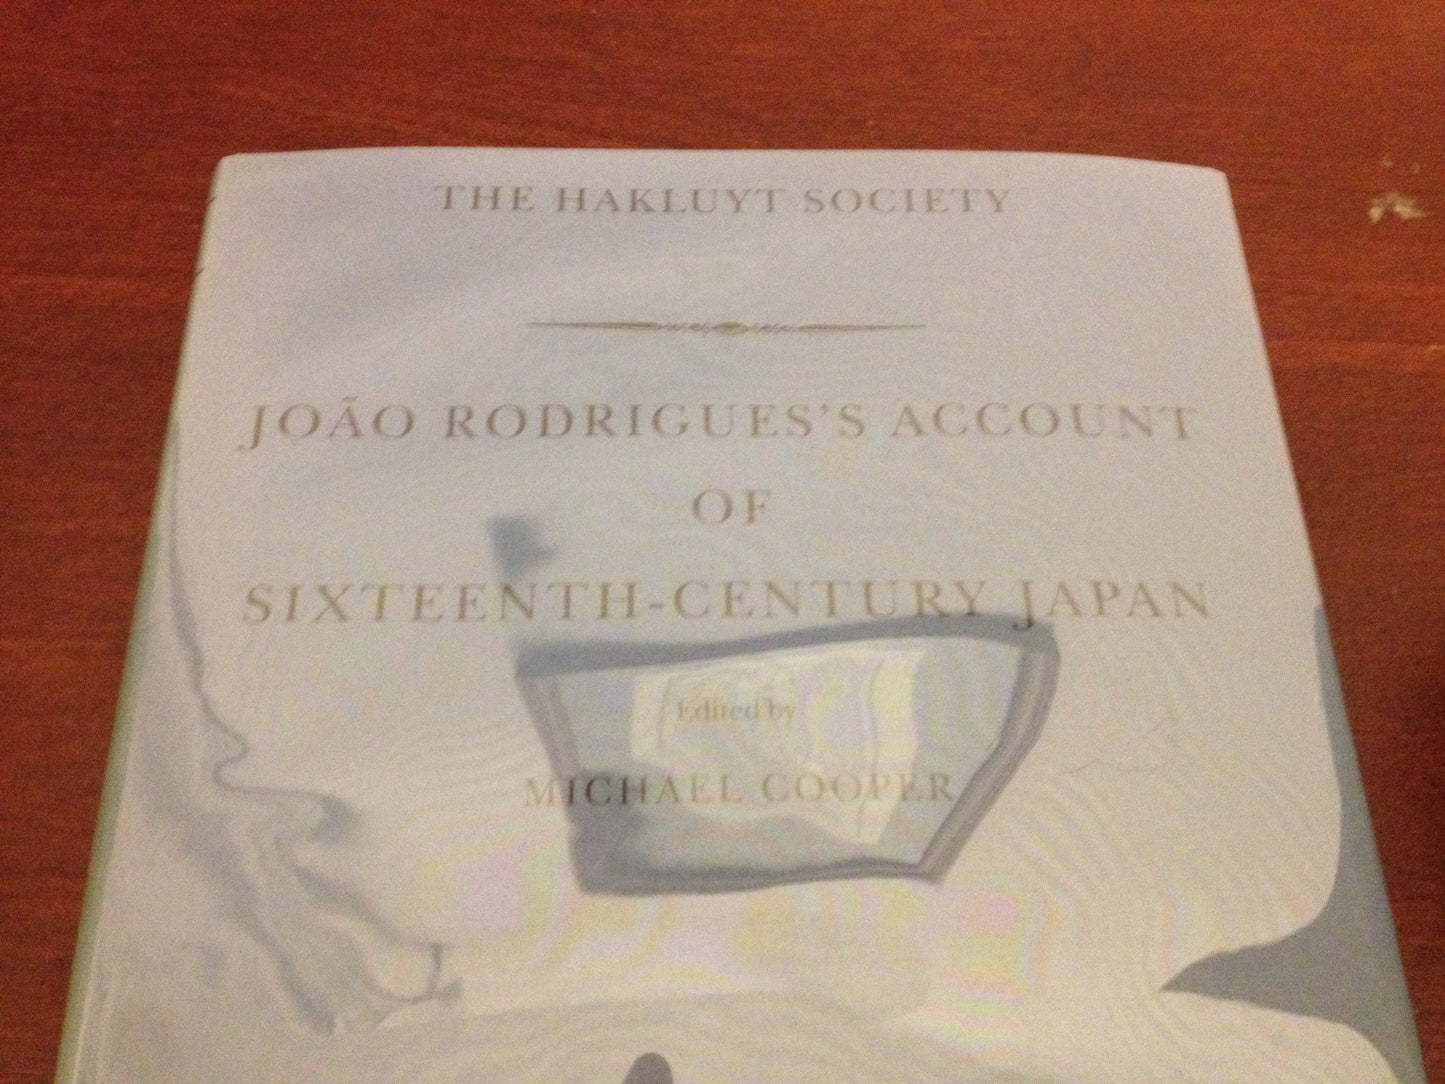 JOAO RODRIGUES' ACOUNT OF SIXTEENTH - CENTURY JAPAN -MICHAEL COOPER